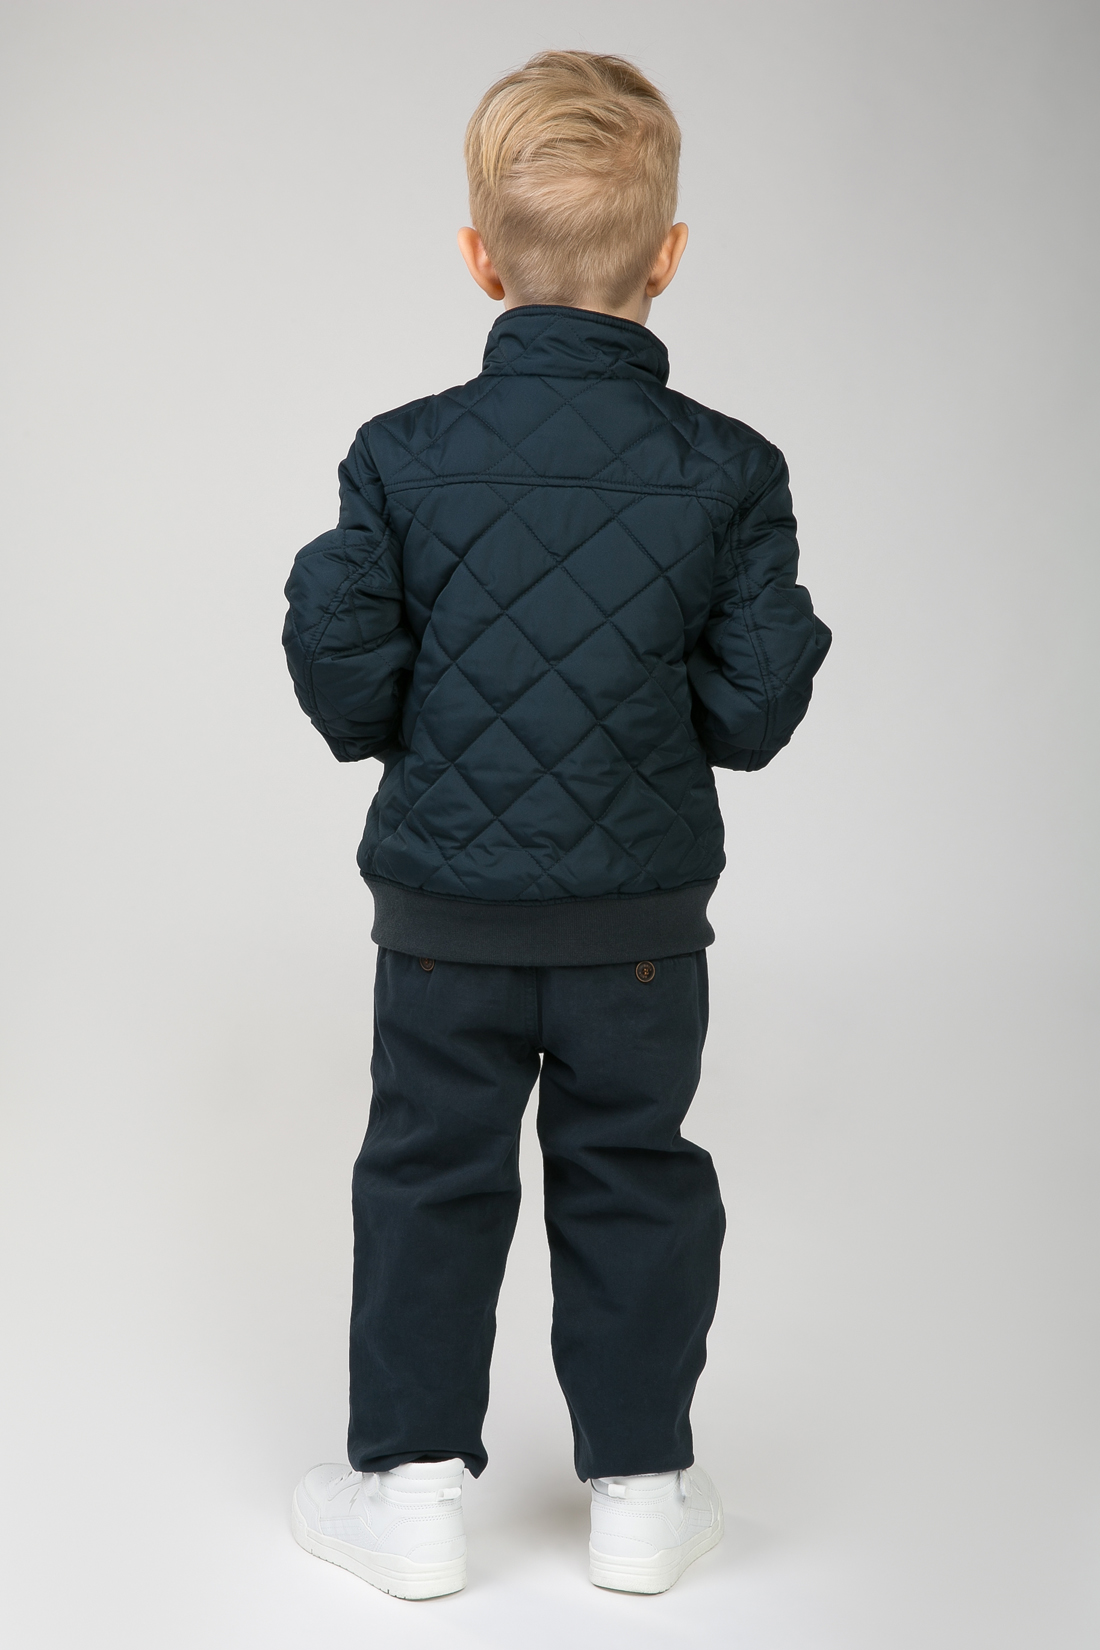 Куртка для мальчика (арт. baon BK538005), размер 98-104, цвет синий Куртка для мальчика (арт. baon BK538005) - фото 2